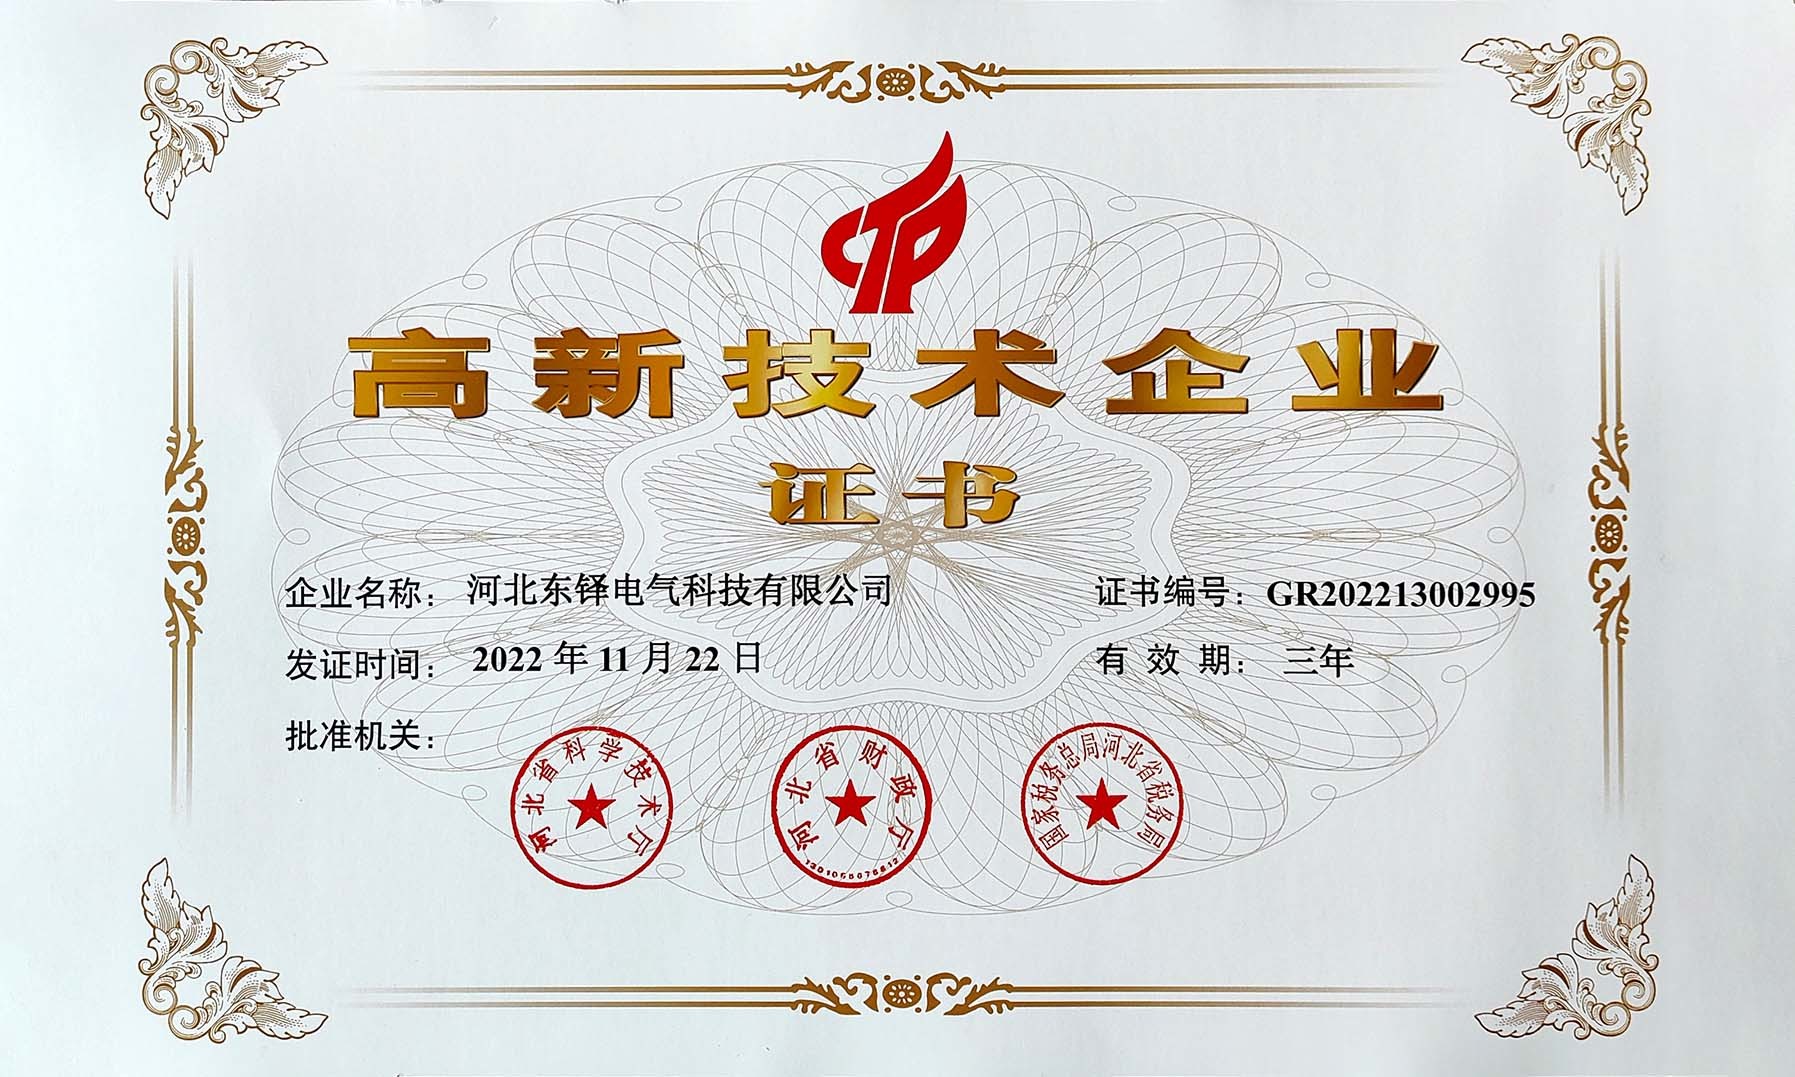 凯发网站 has been recognized as a high-tech enterprise